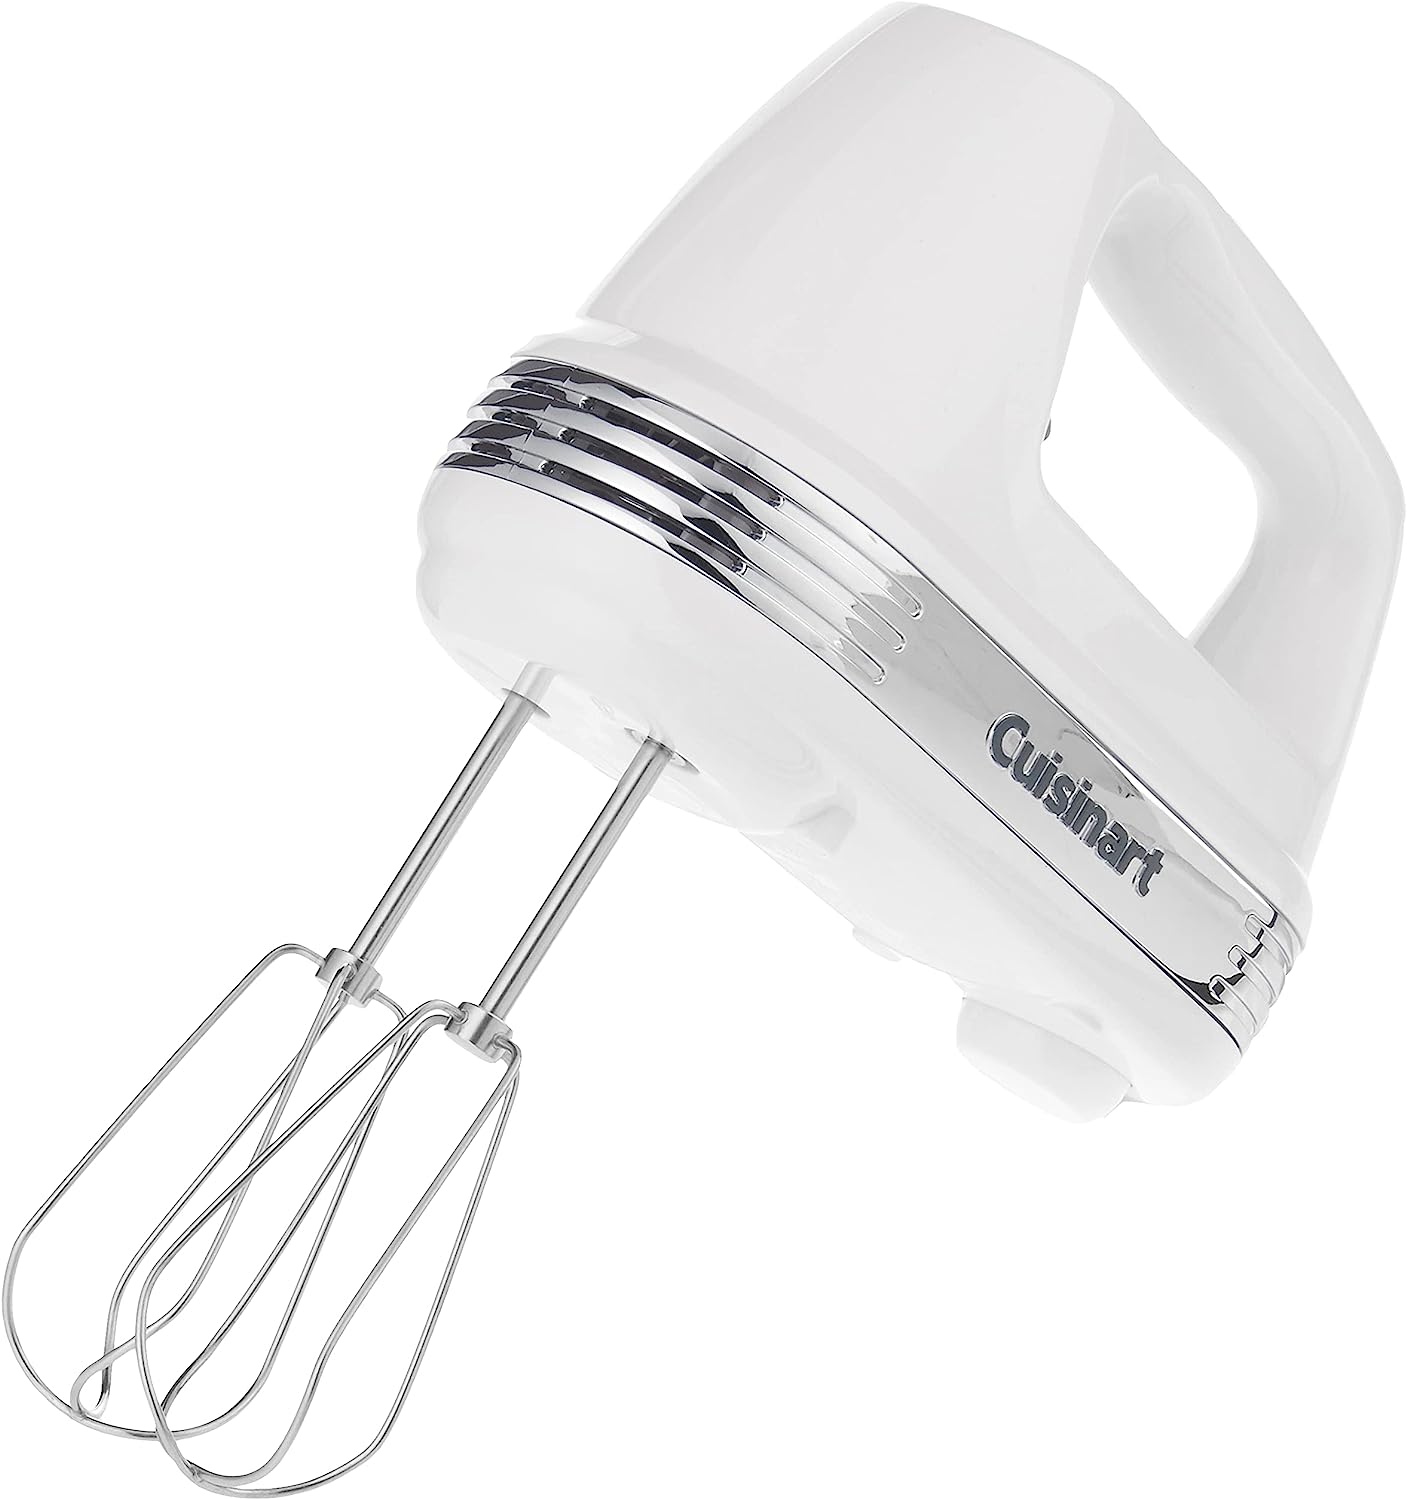 Cuisinart Power Advantage 5-Speed Hand Mixer - White (New)